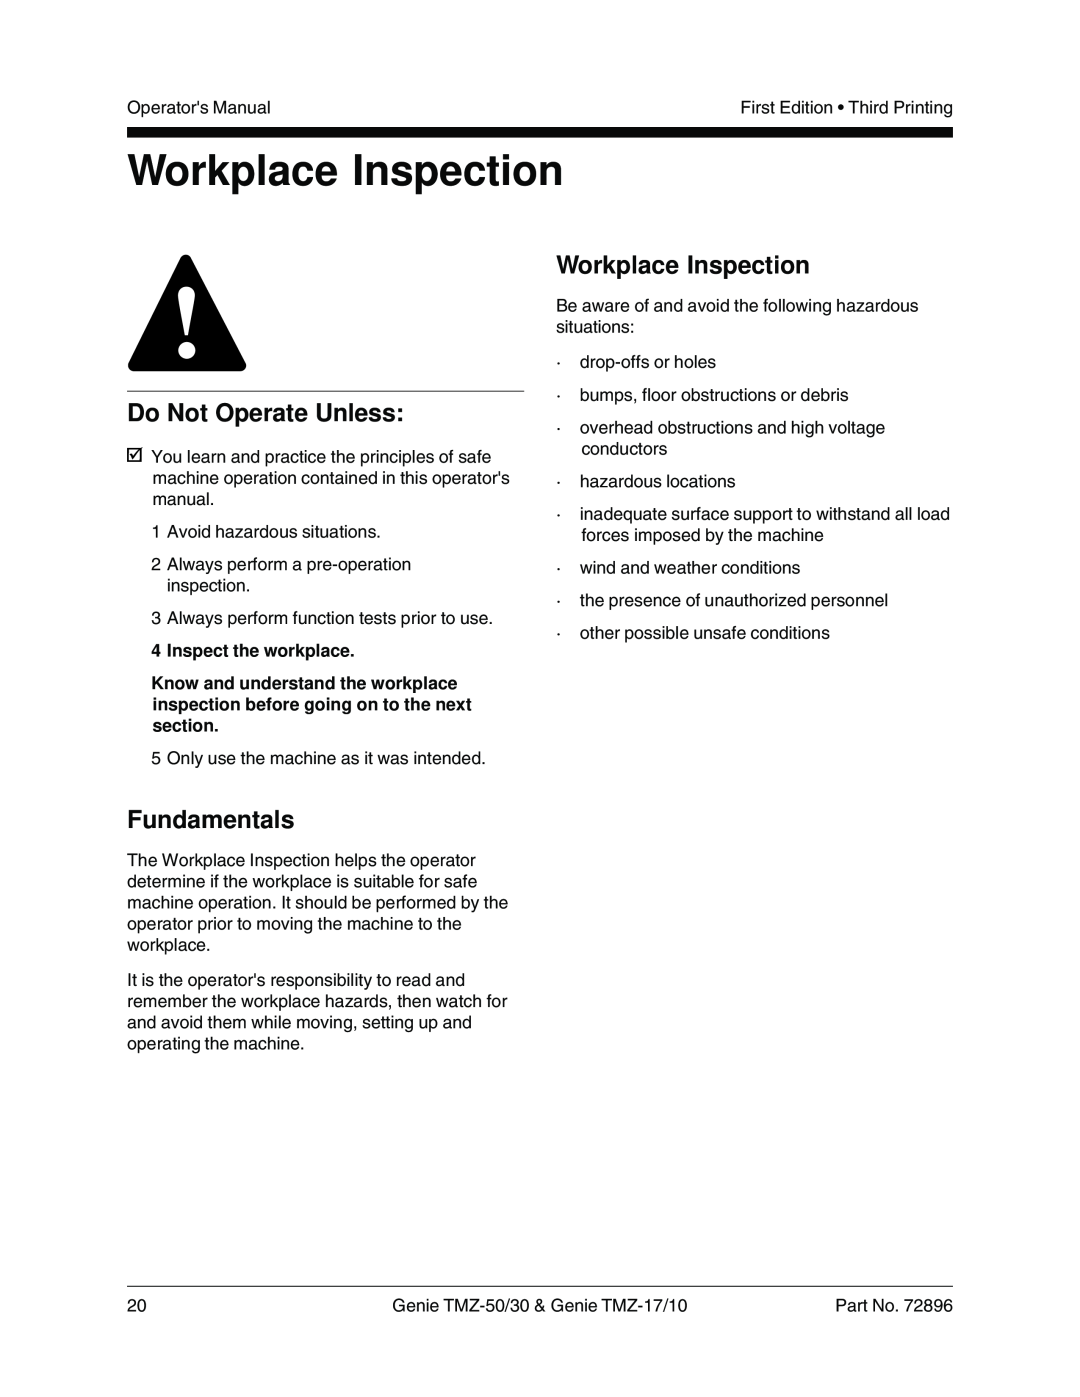 Genie TMZ-50, TMZ-30, TMZ-17, TMZ-10 manual Workplace Inspection, Inspect the workplace, Do Not Operate Unless, Fundamentals 